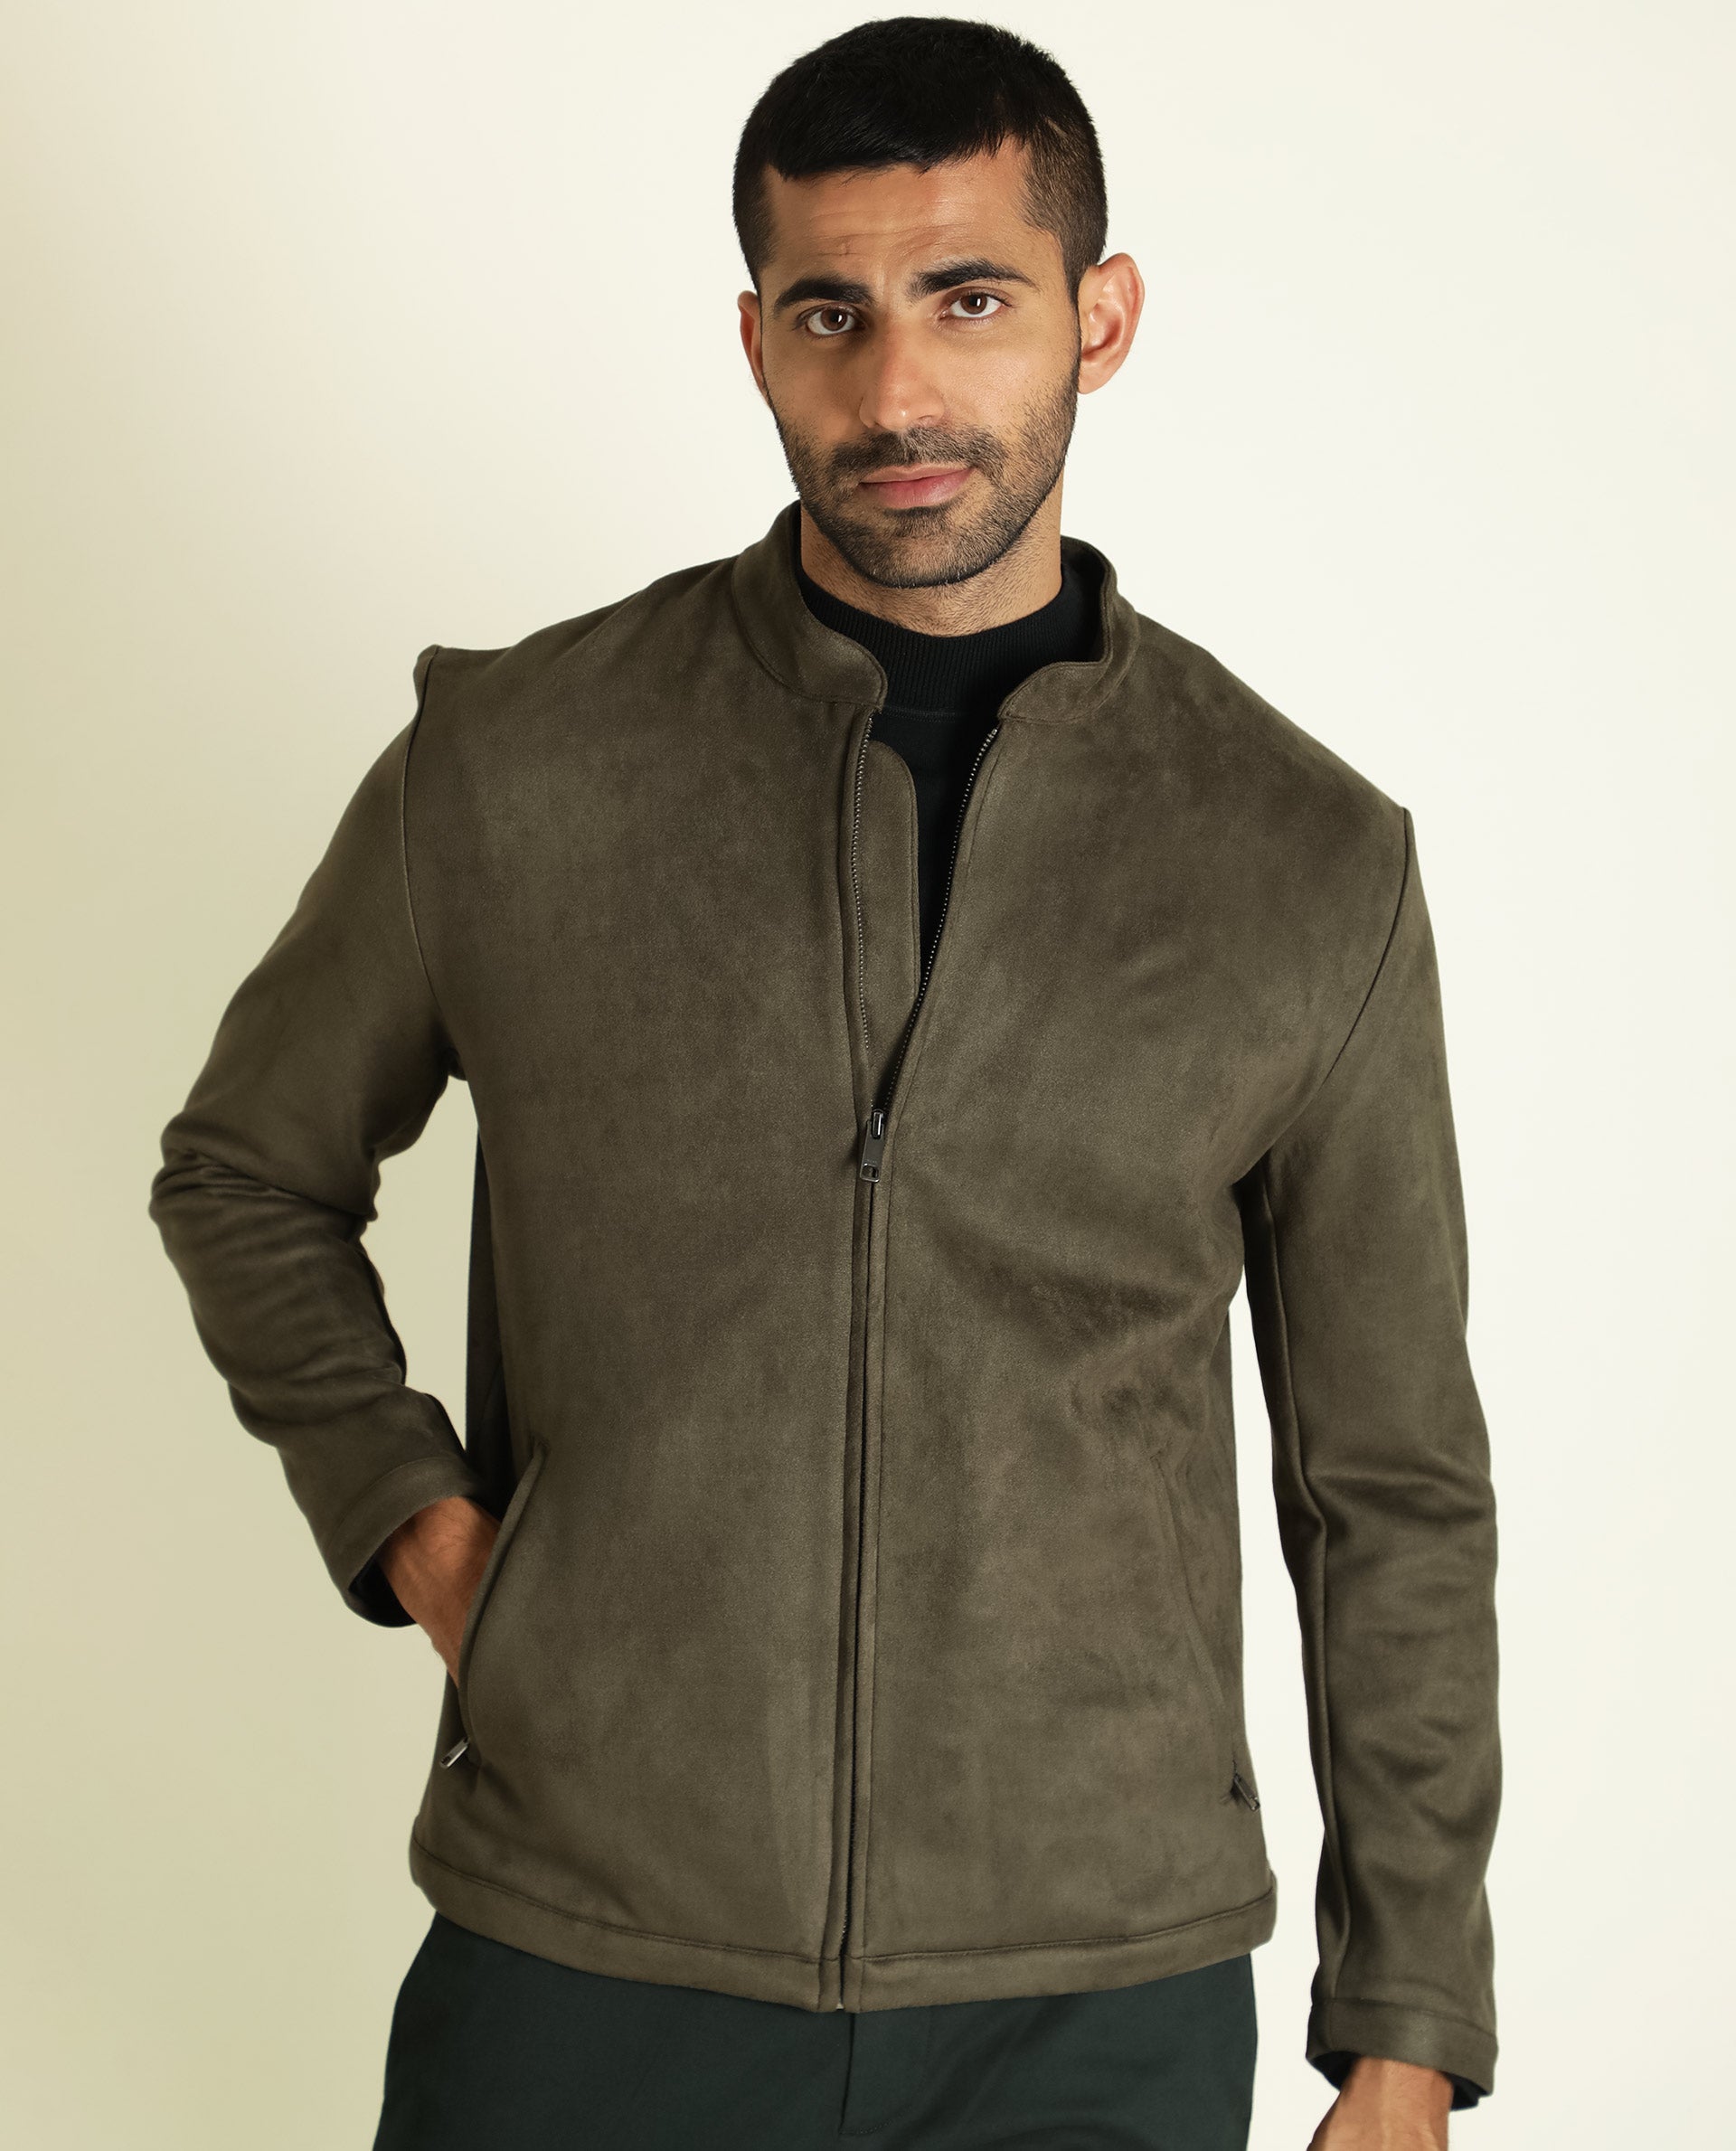 Buy hummel Mens Polyester Jacket (8905402014872, Black, M) at Amazon.in